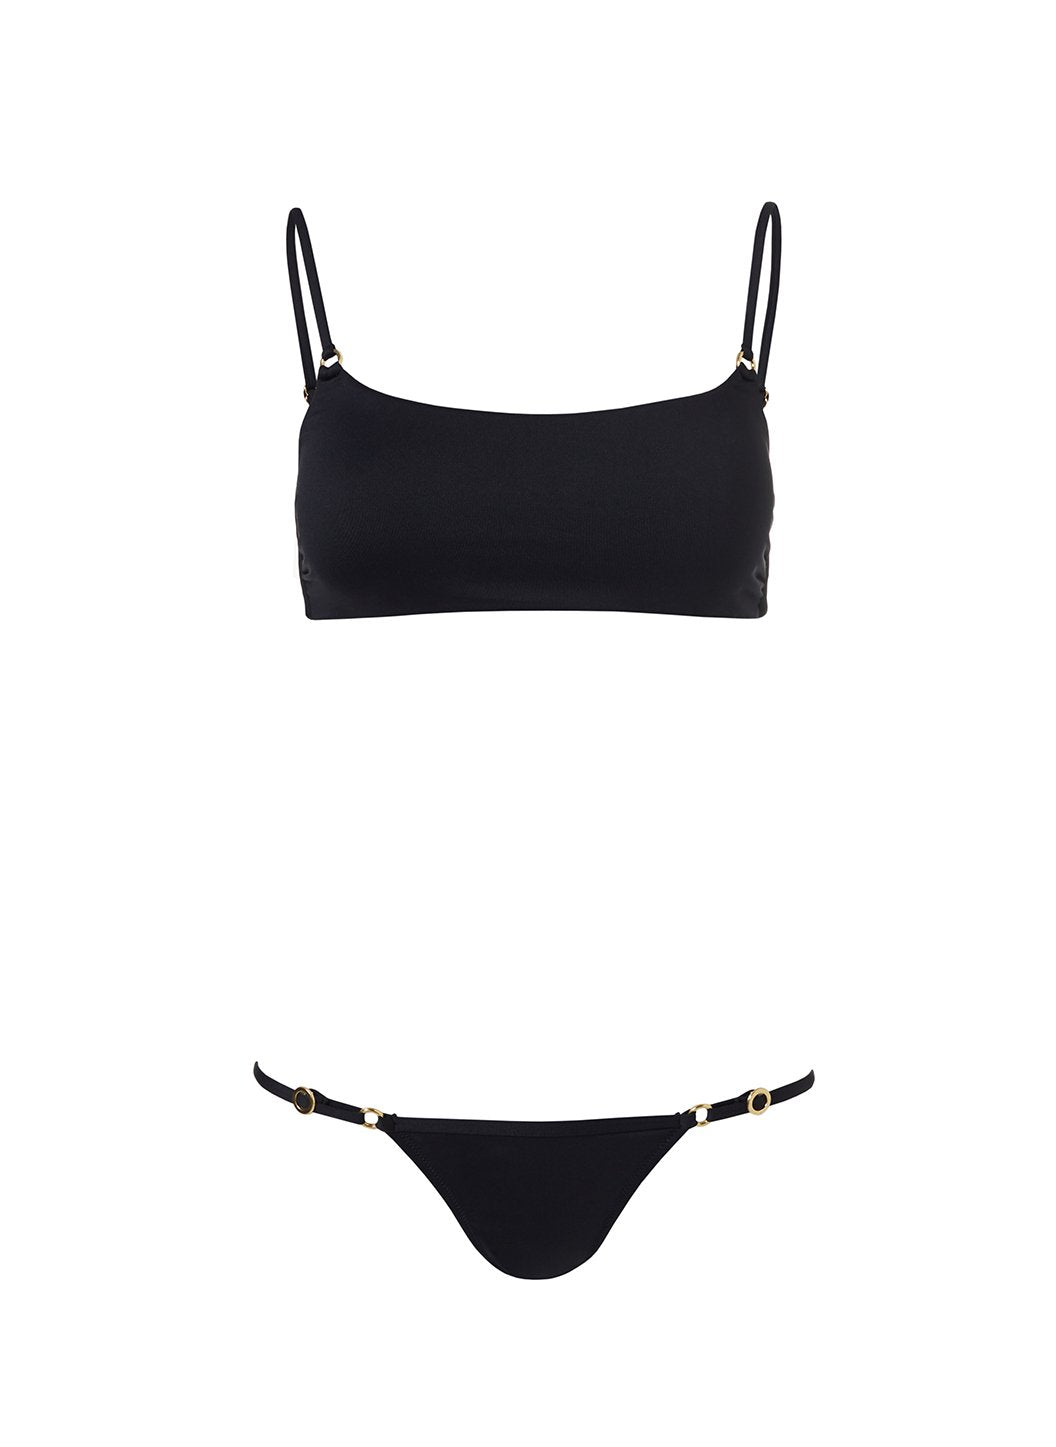 Capri Black Bikini Bottom